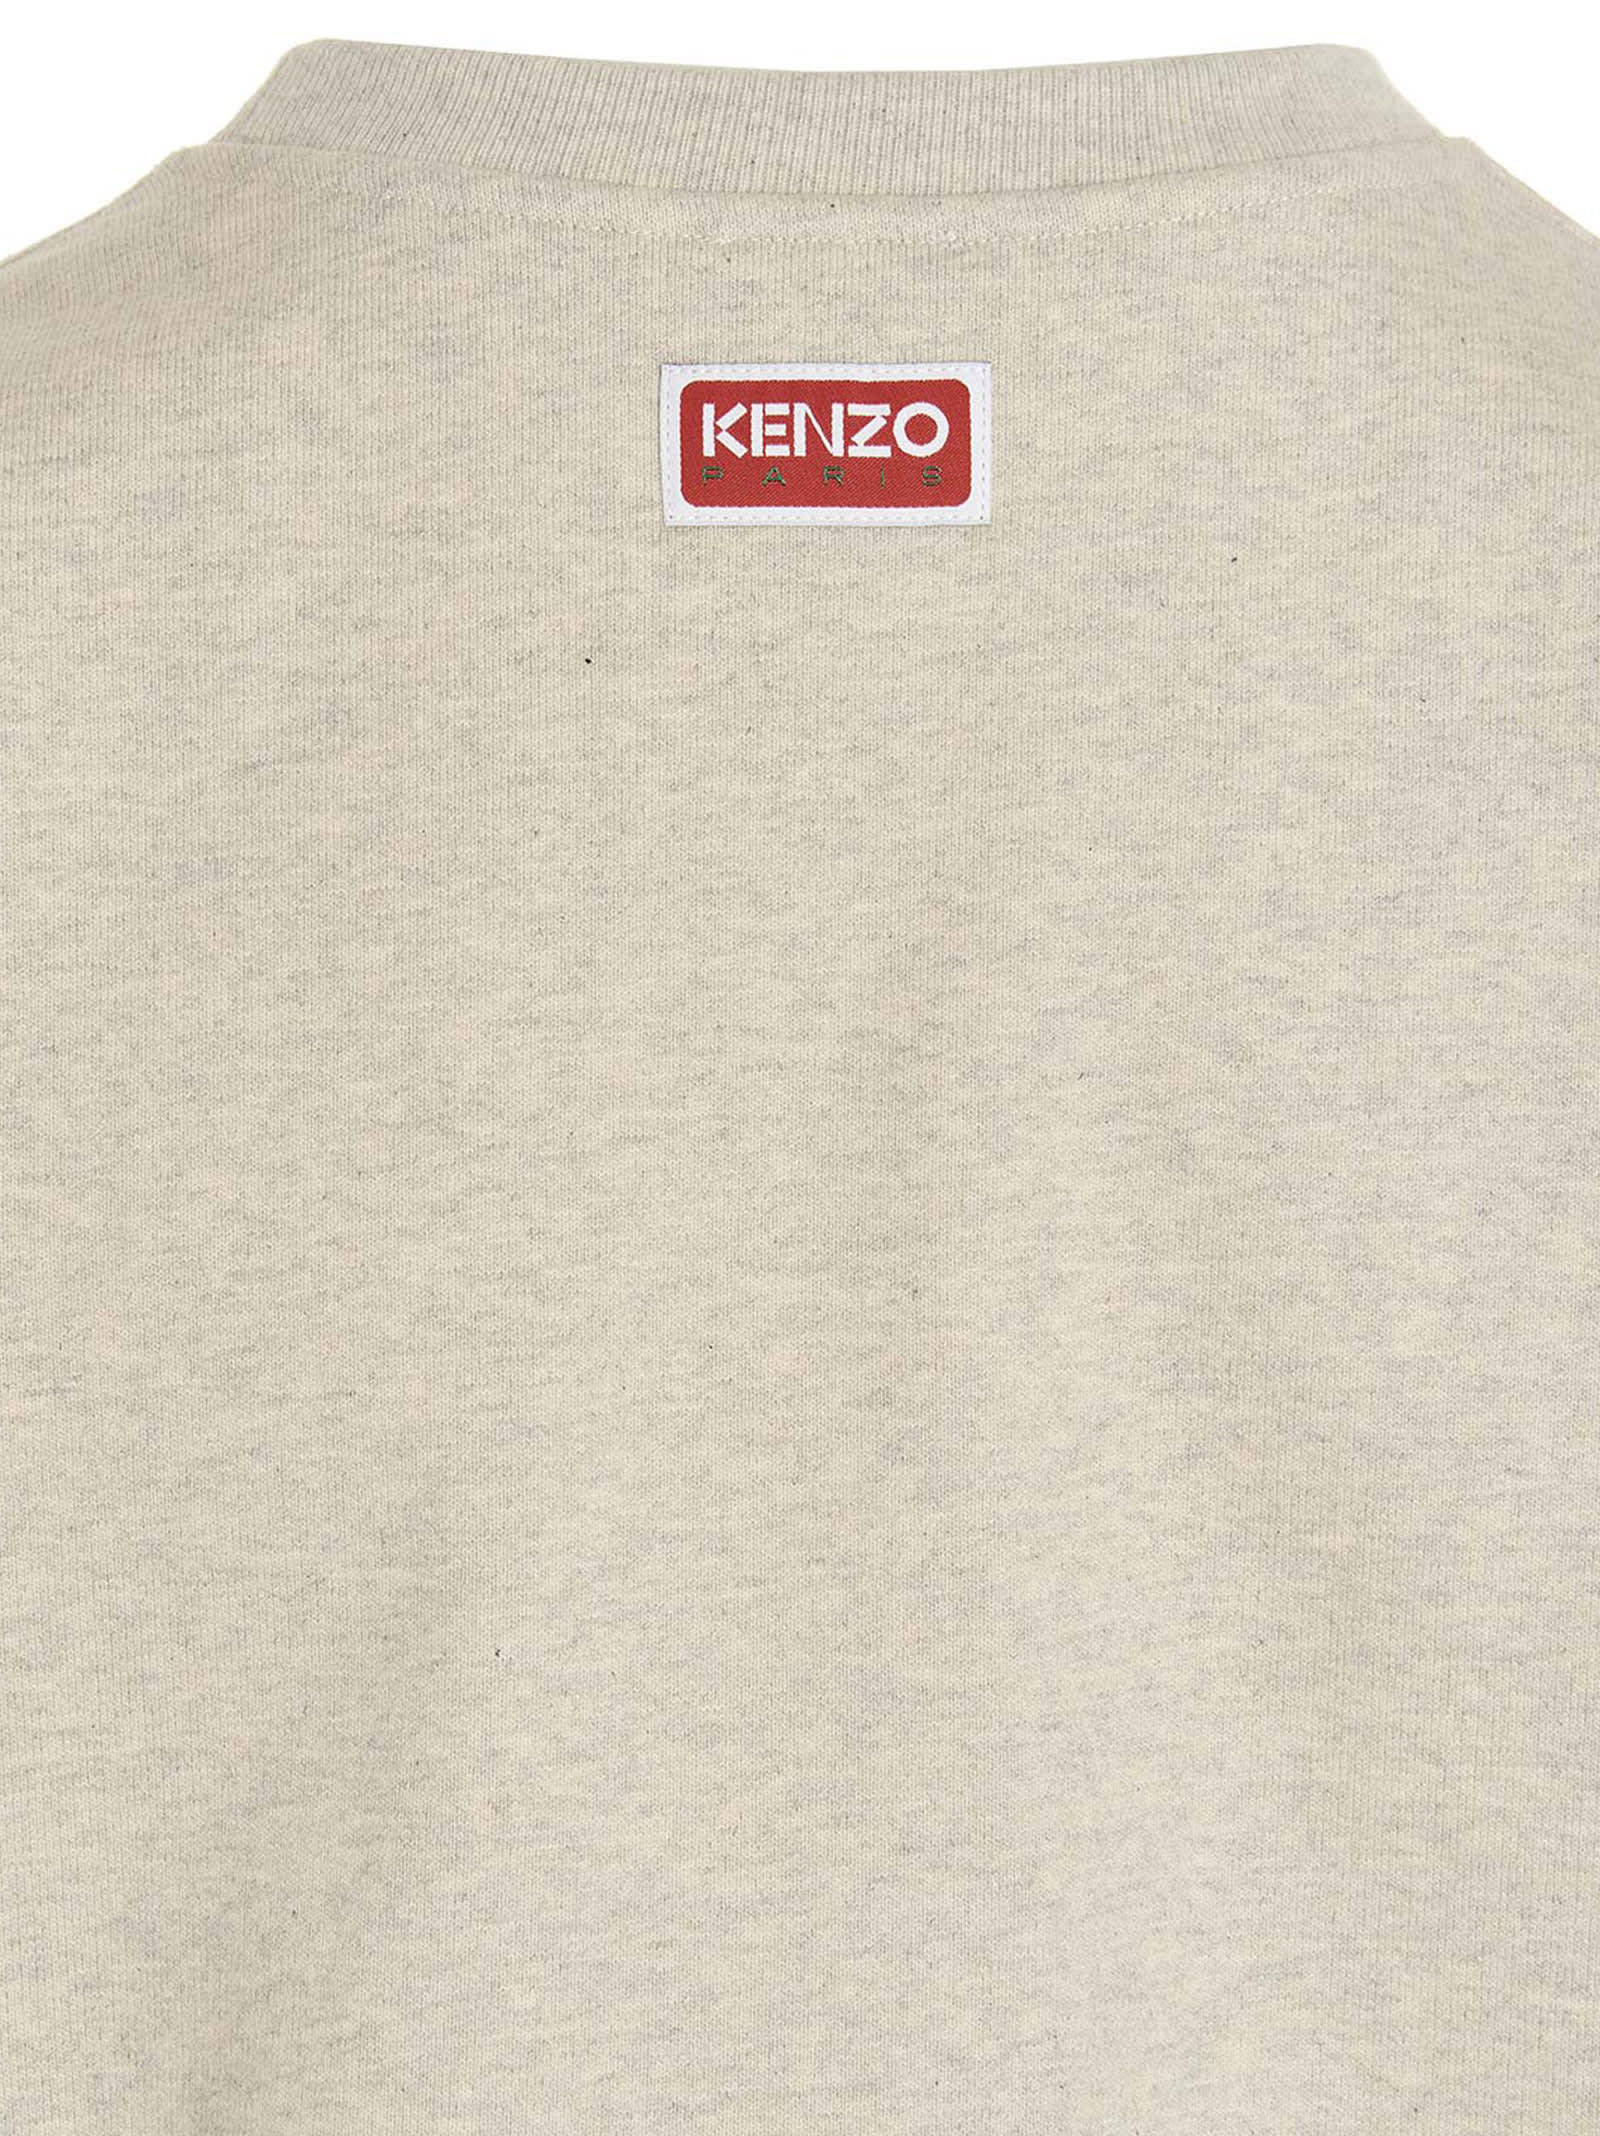 Shop Kenzo Paris Sweatshirt In Pale Grey